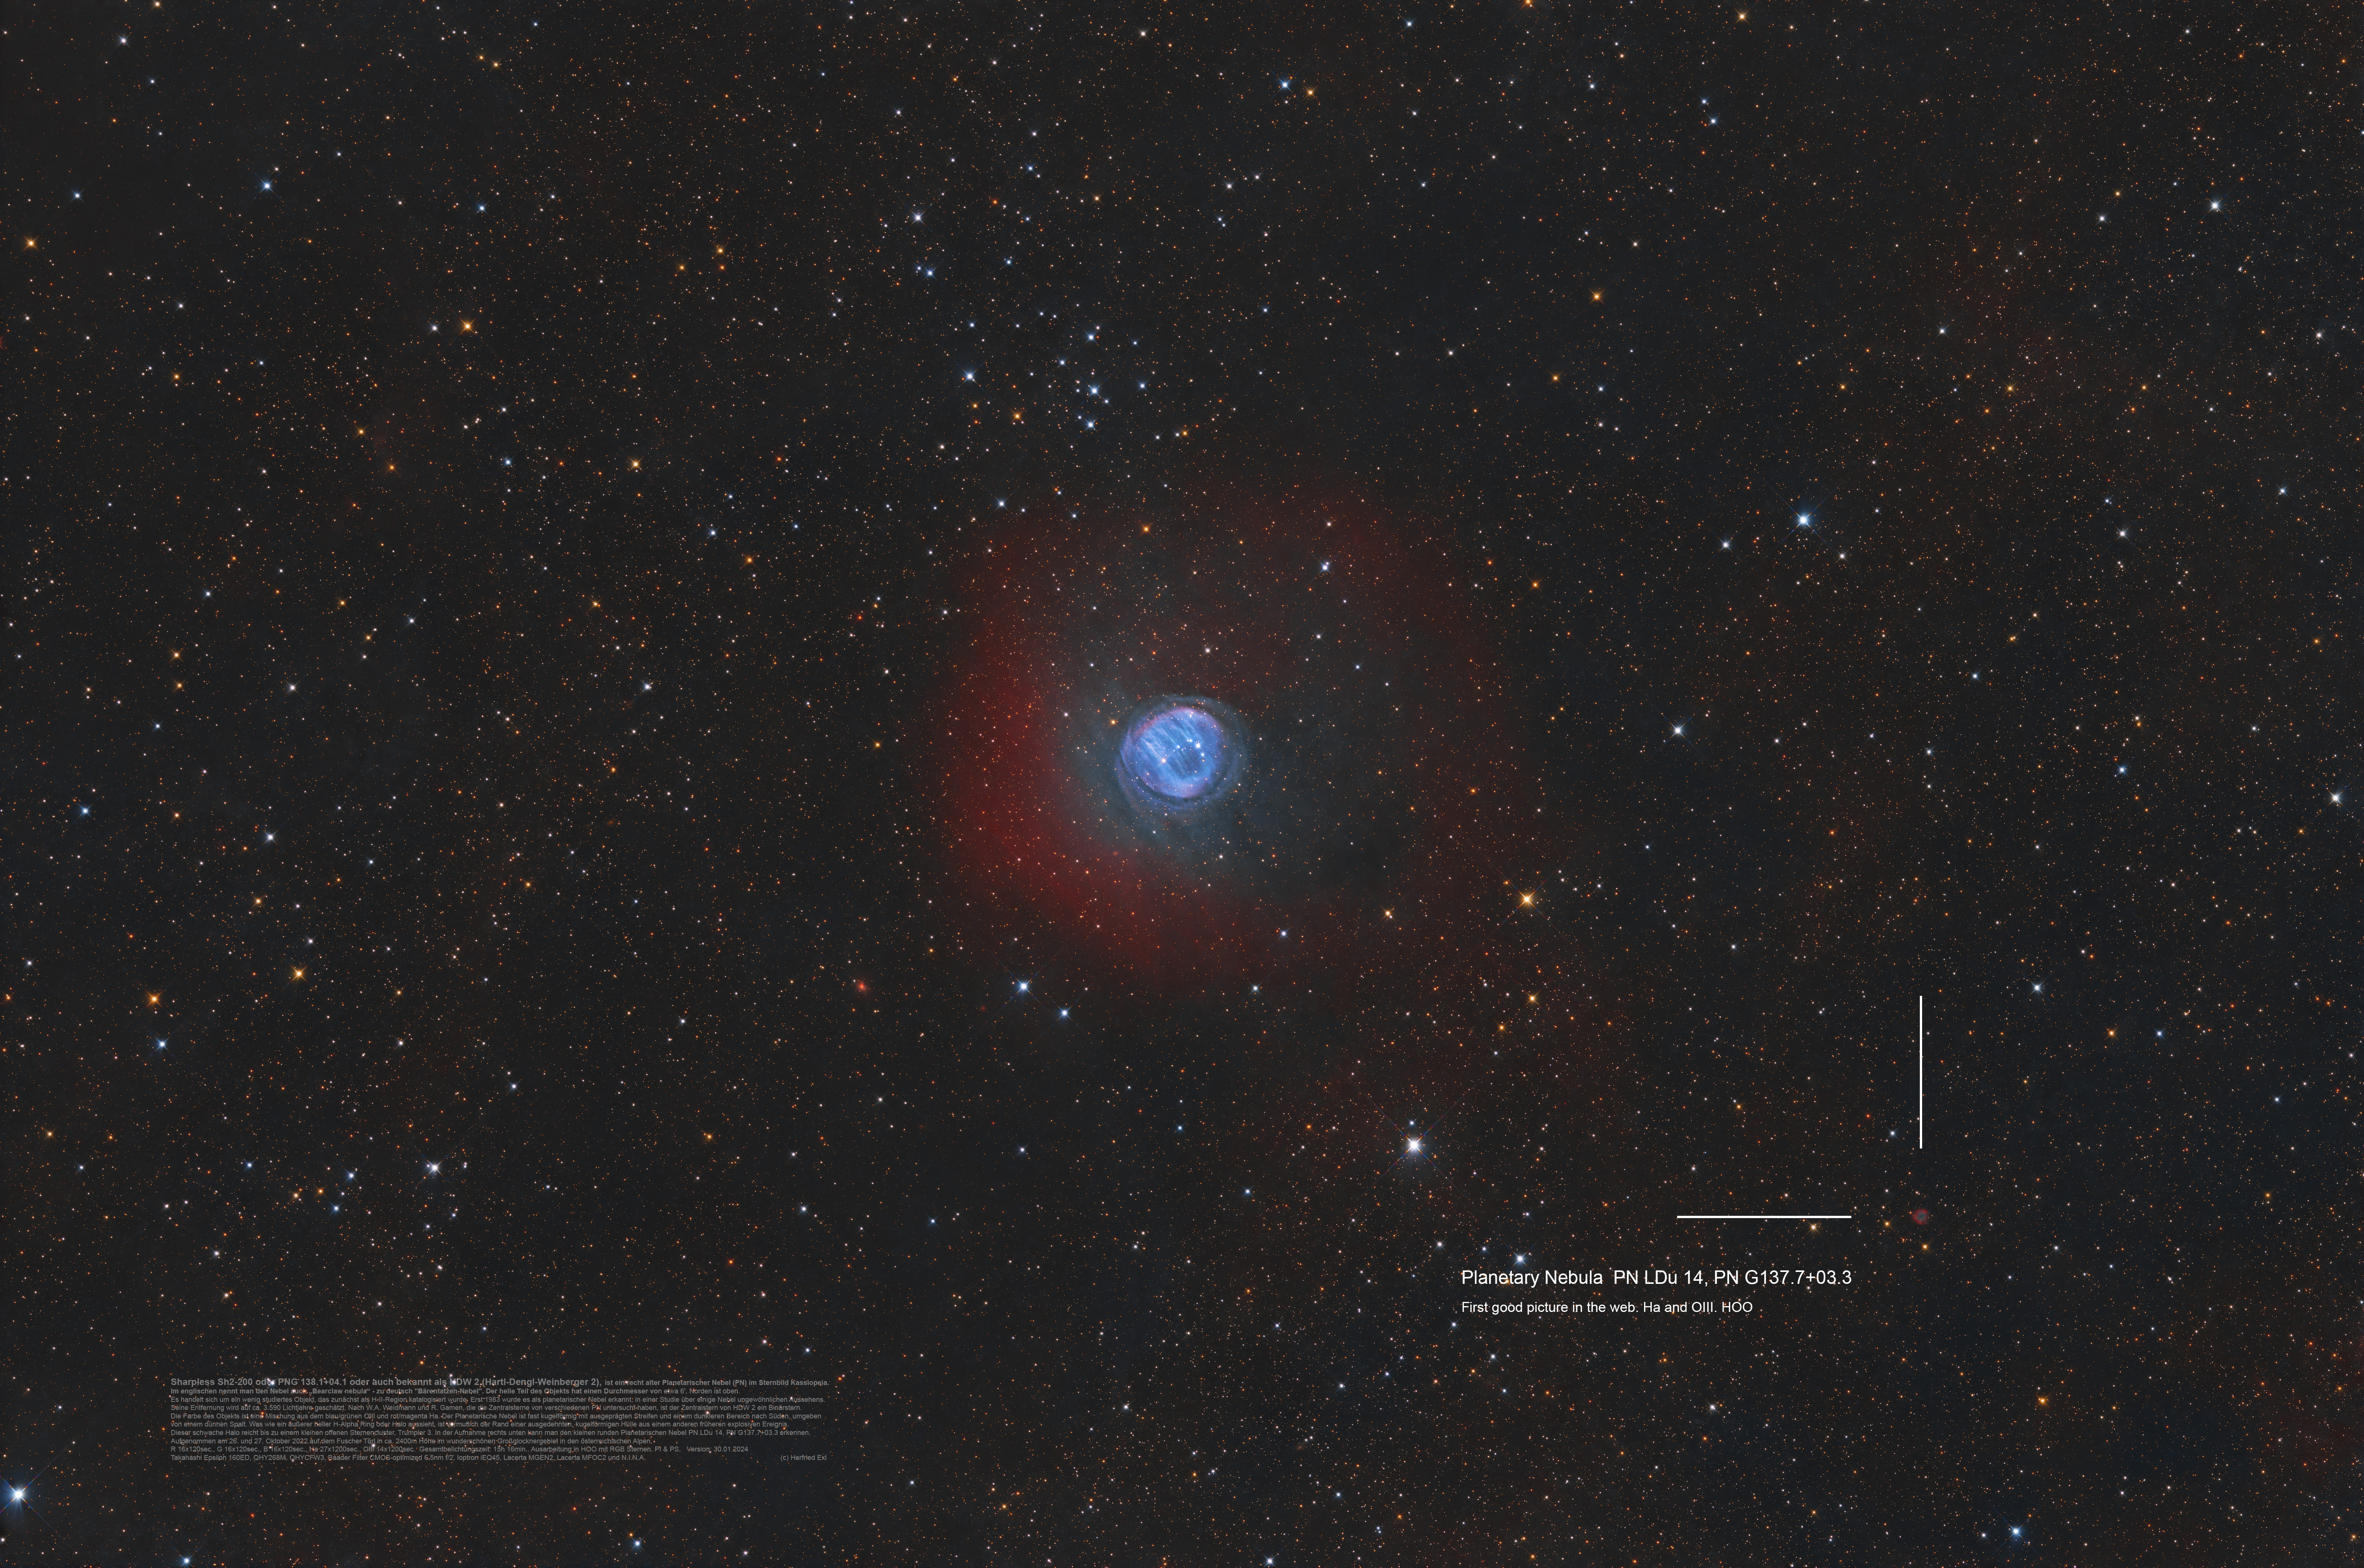 Sh2-200_and_Planetary_Nebula_PN_LDu_14__PN_G137.7+03.3_530mm_27102022_Fuscher-Toerl_V30012024